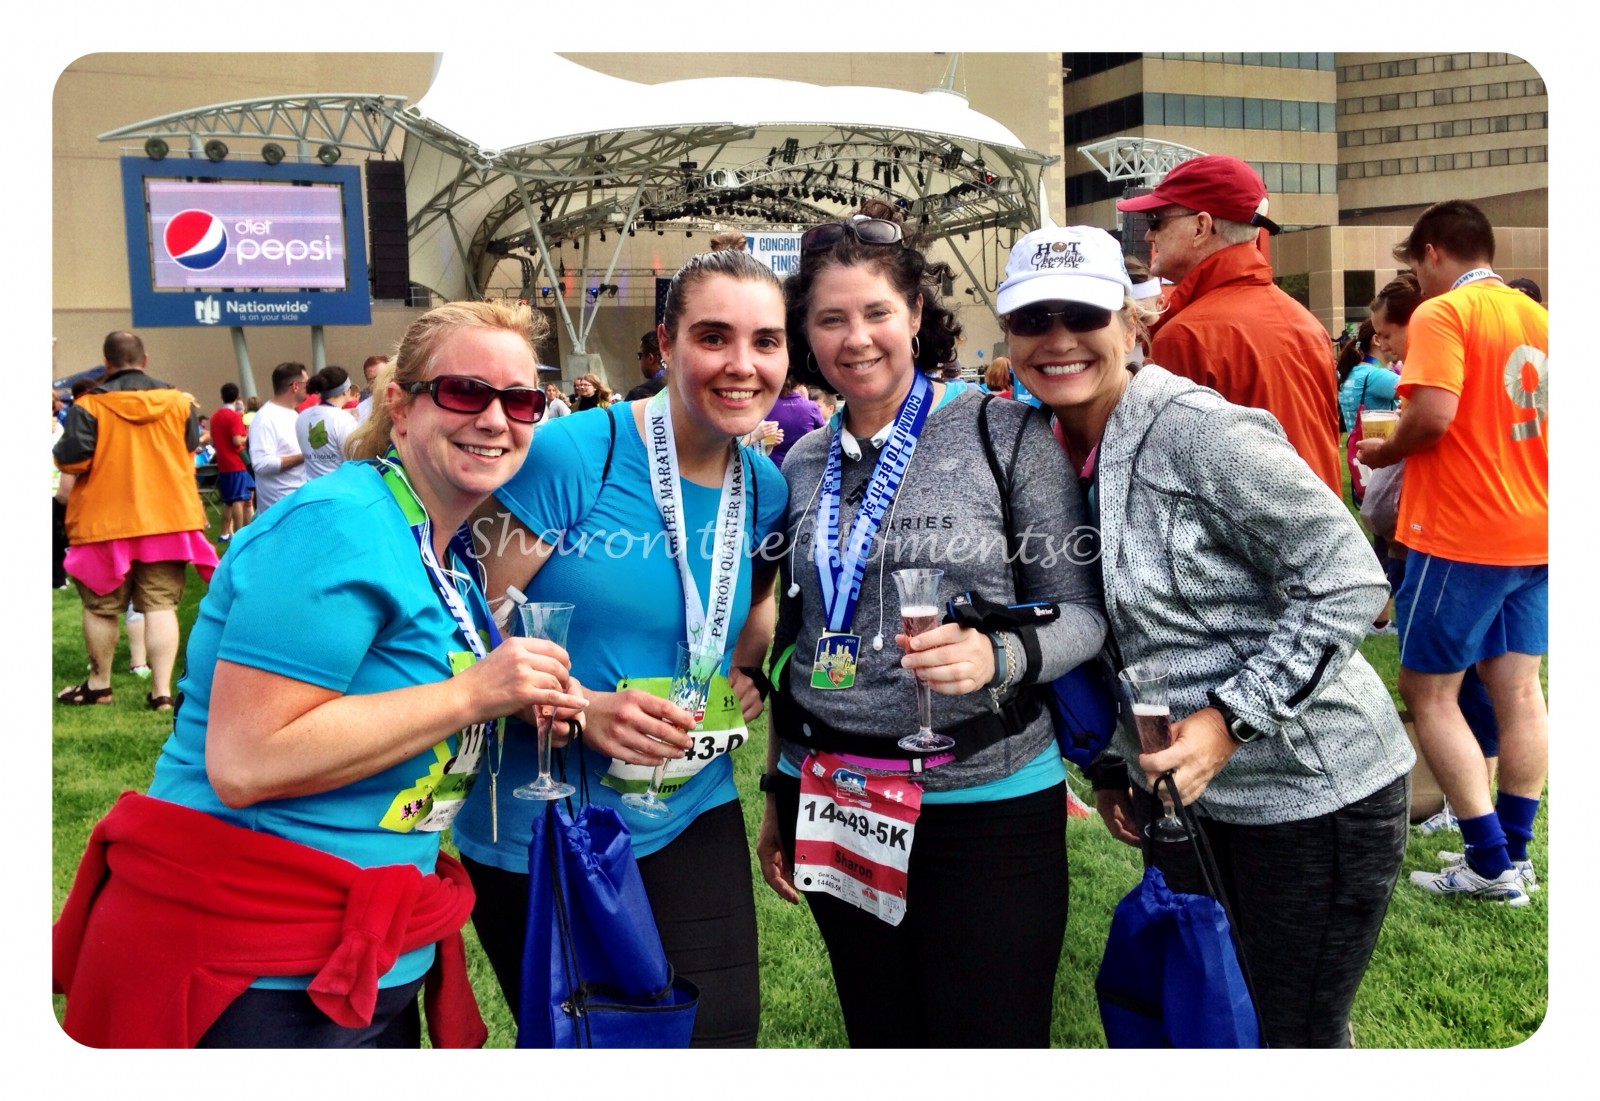 Cap City Half Marathon and 5K in Columbus OH|Sharon the Moments Blog